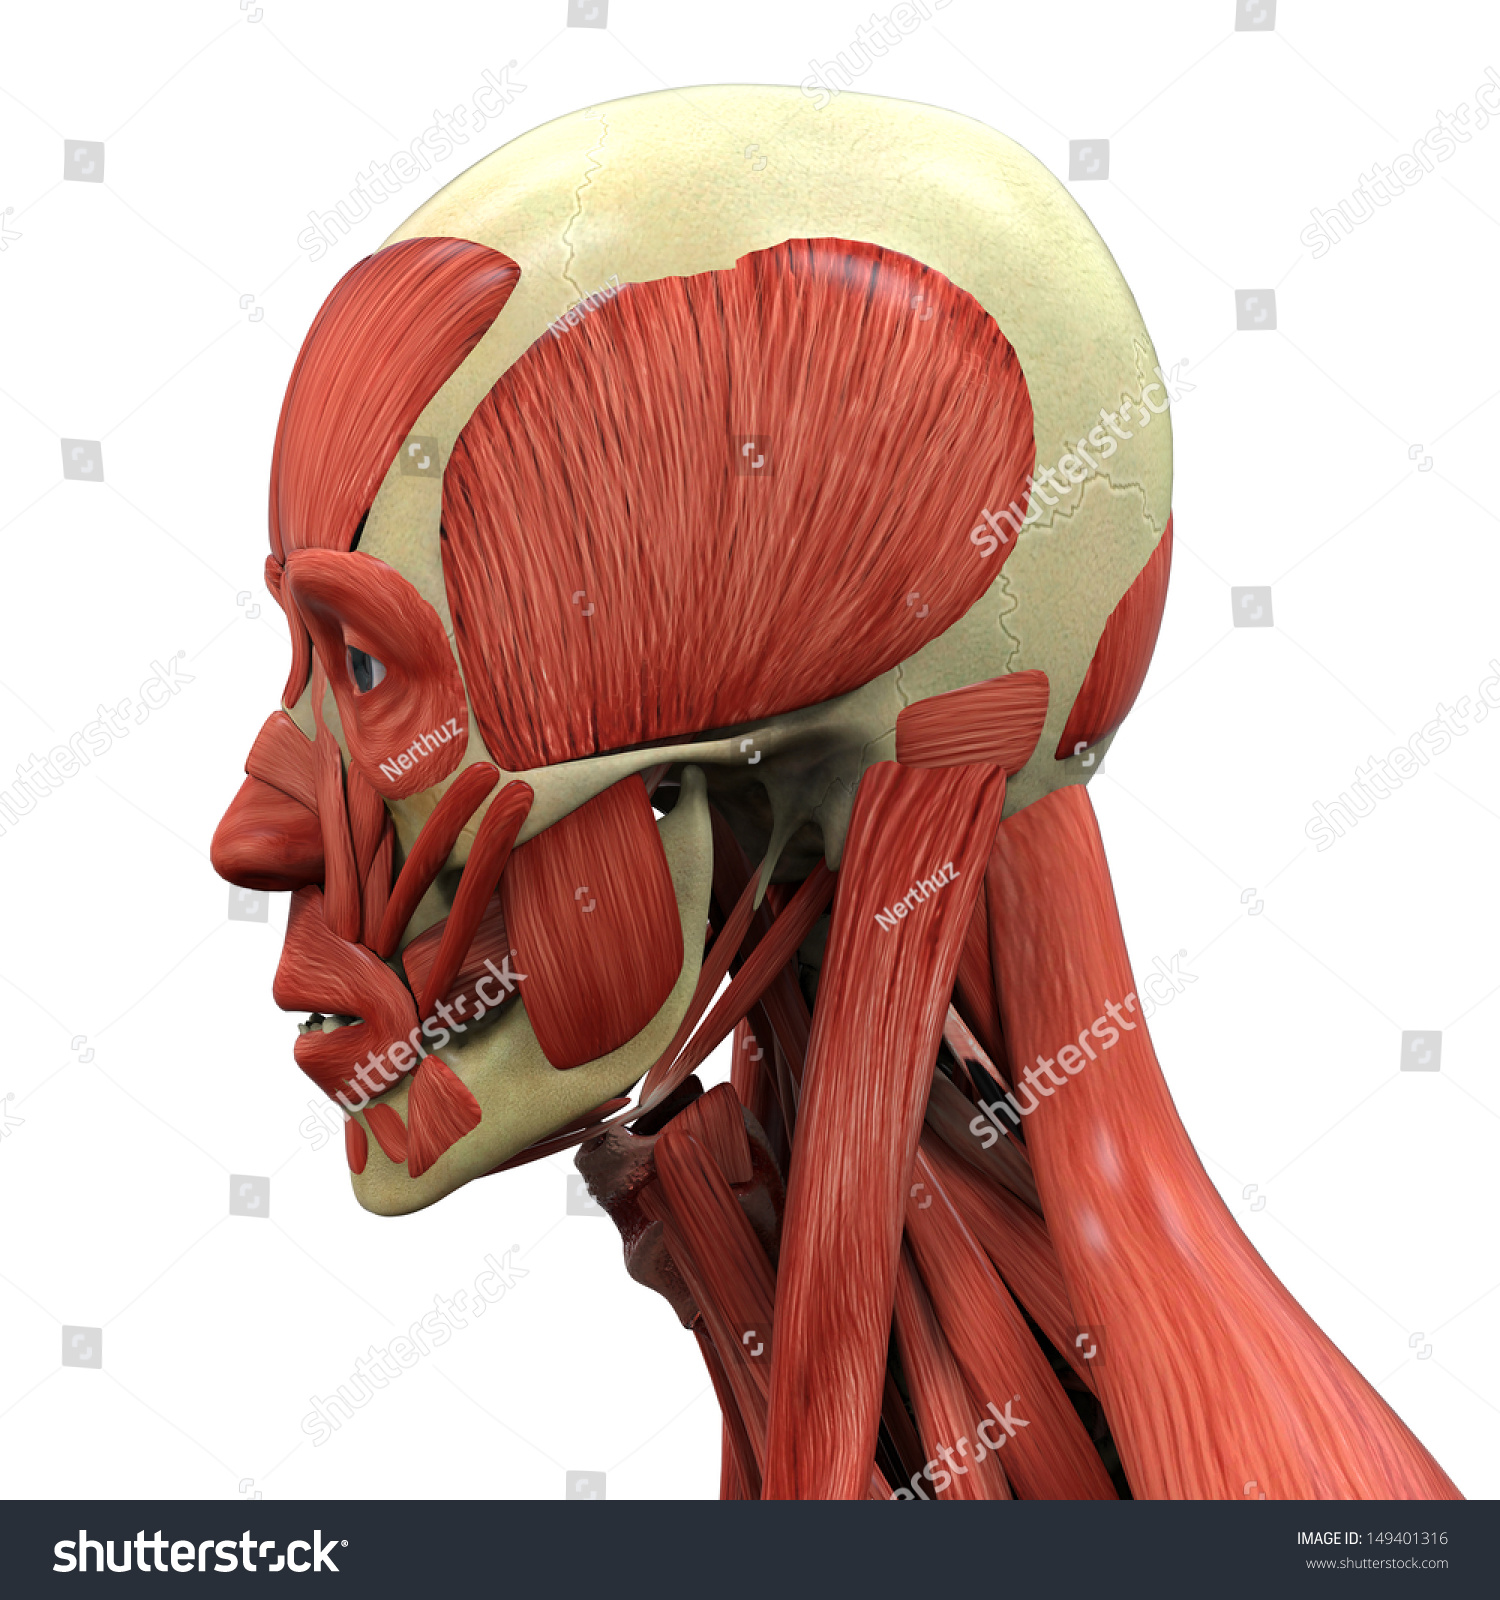 Human Face Anatomy Stock Photo 149401316 : Shutterstock